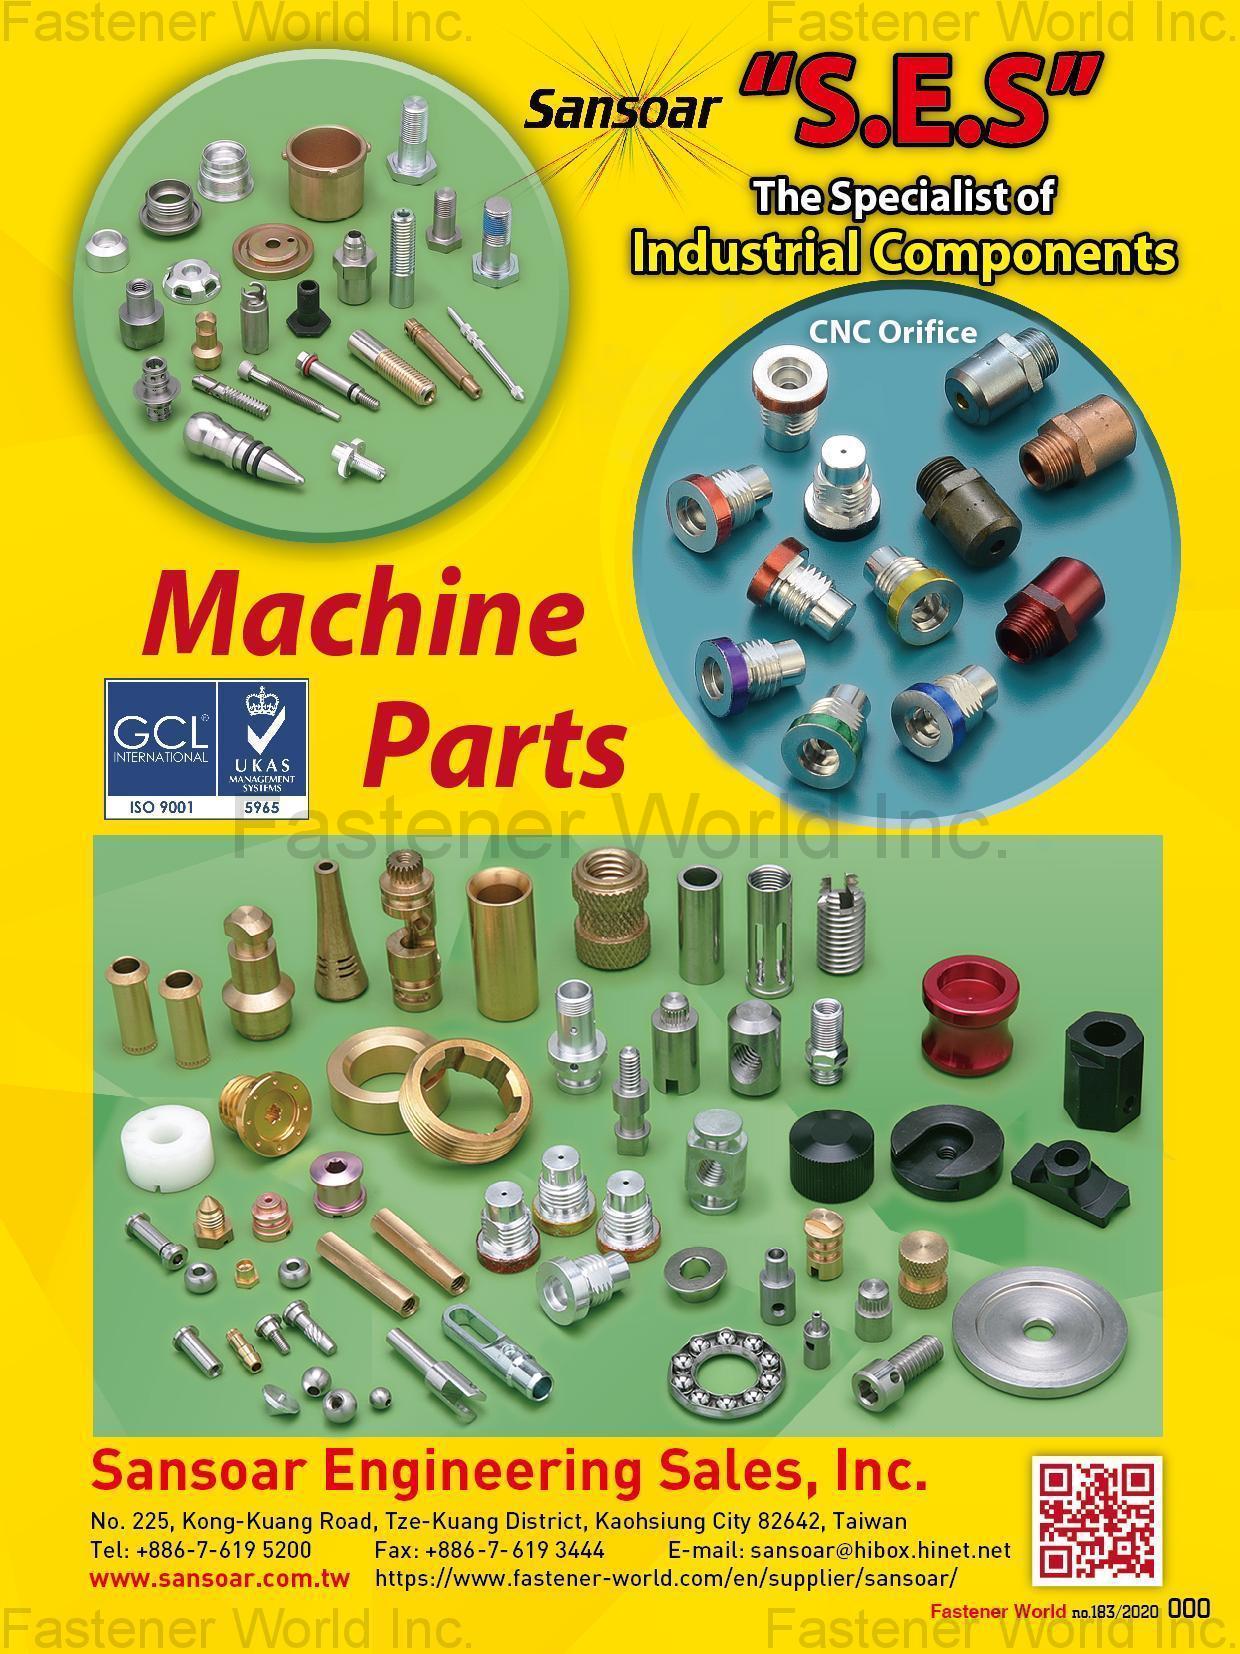 SANSOAR ENGINEERING SALES, INC.  , Industrial Components, Machine Parts, CNC Orifice